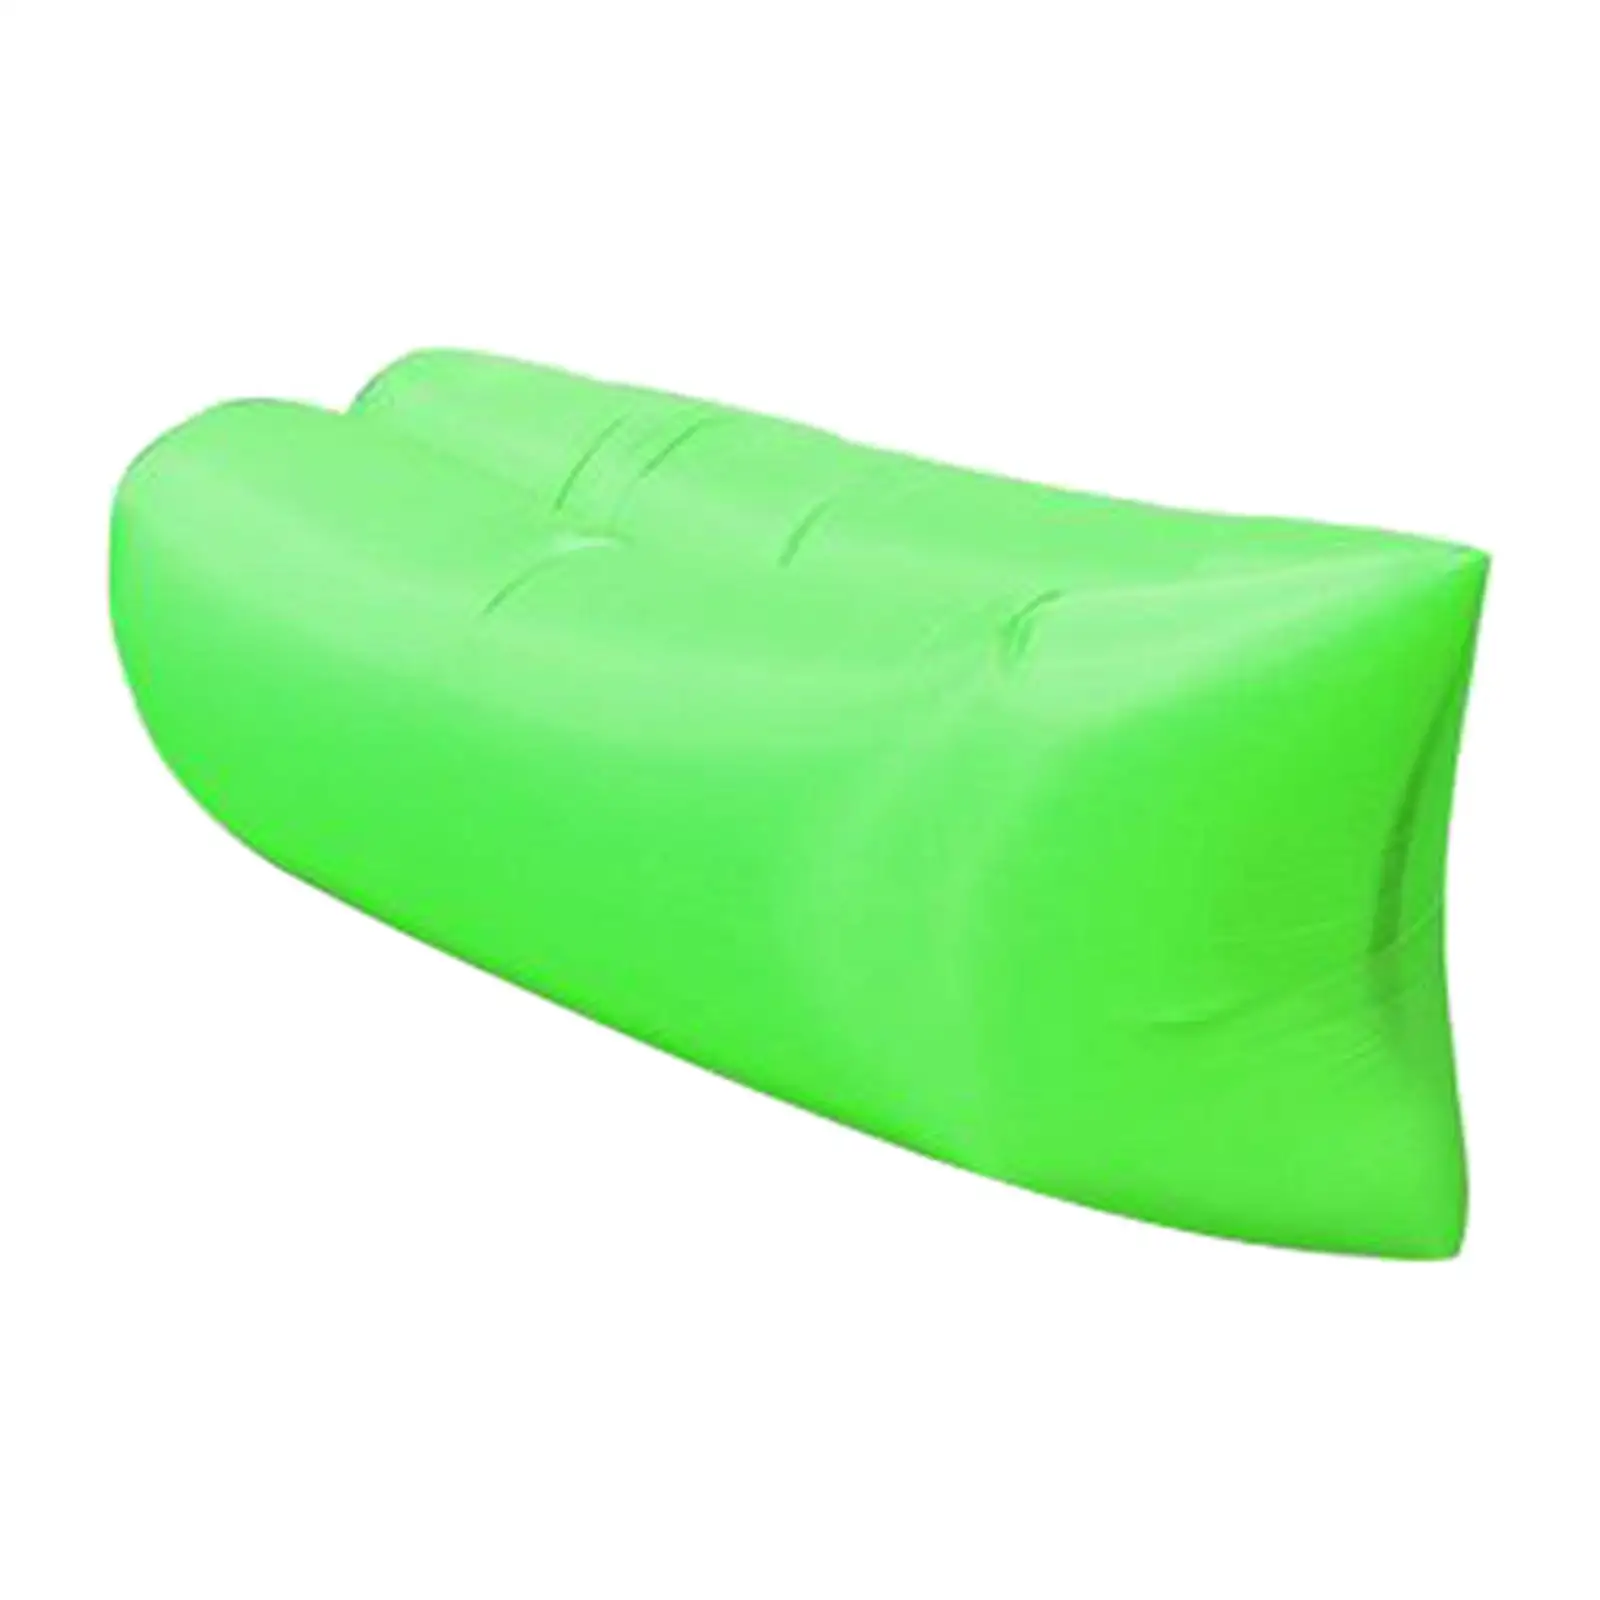 Inflatable Lounger Outdoor Sofa Hammock Bed Sleeping Bag for Camping, Park, Beach, Backyard, Fishing, Swimming, Pool